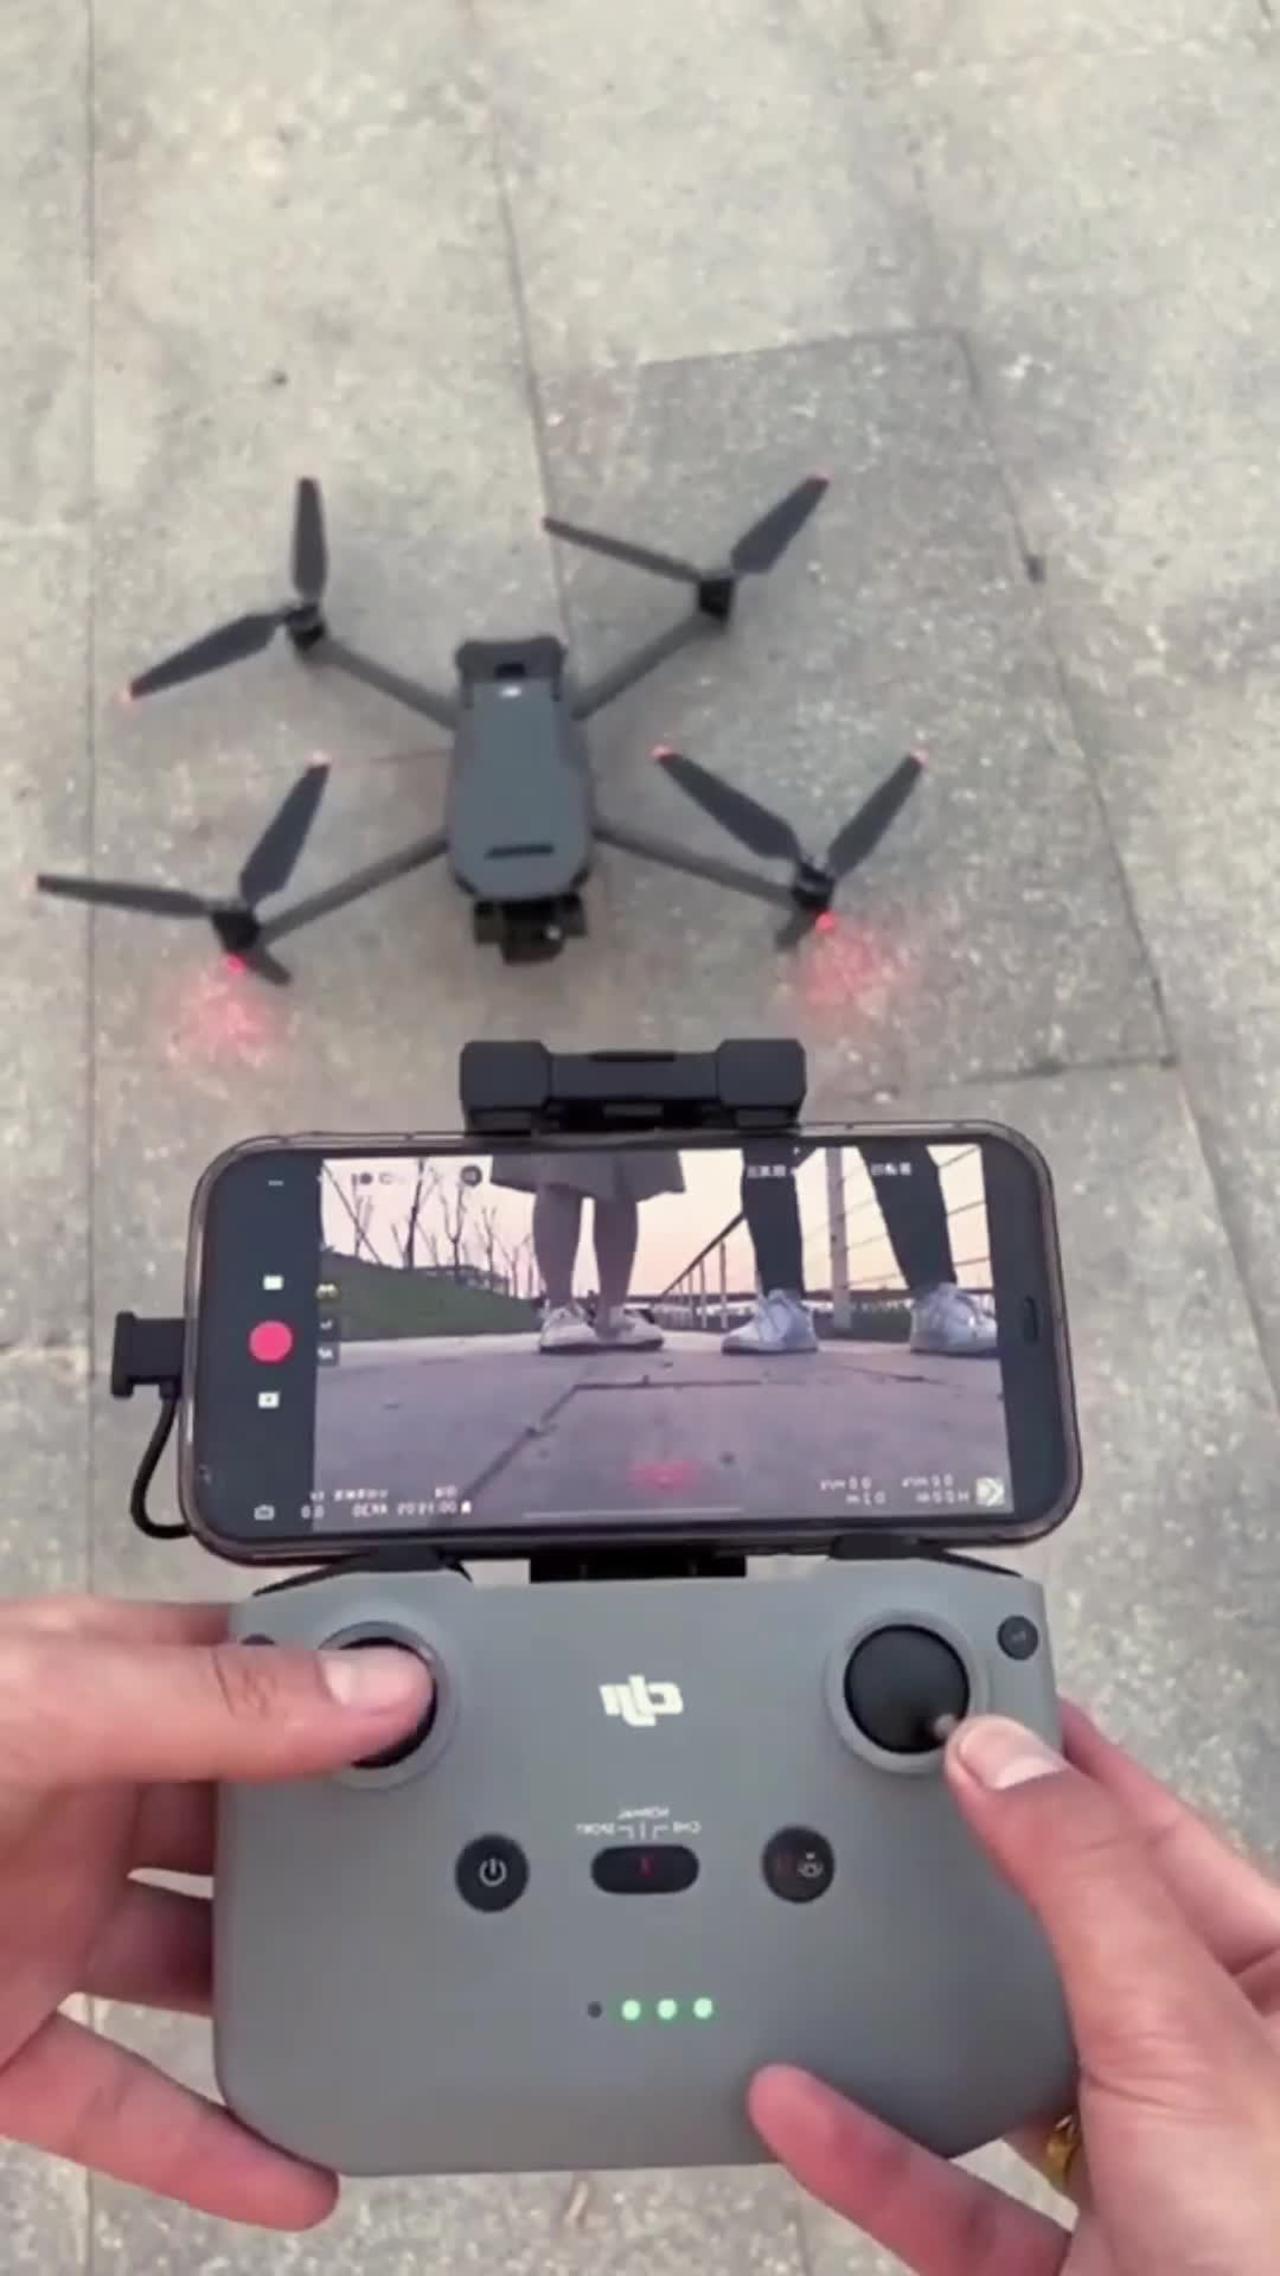 UAV Drone 😜😮 for you #short #ytshorts #gadgets